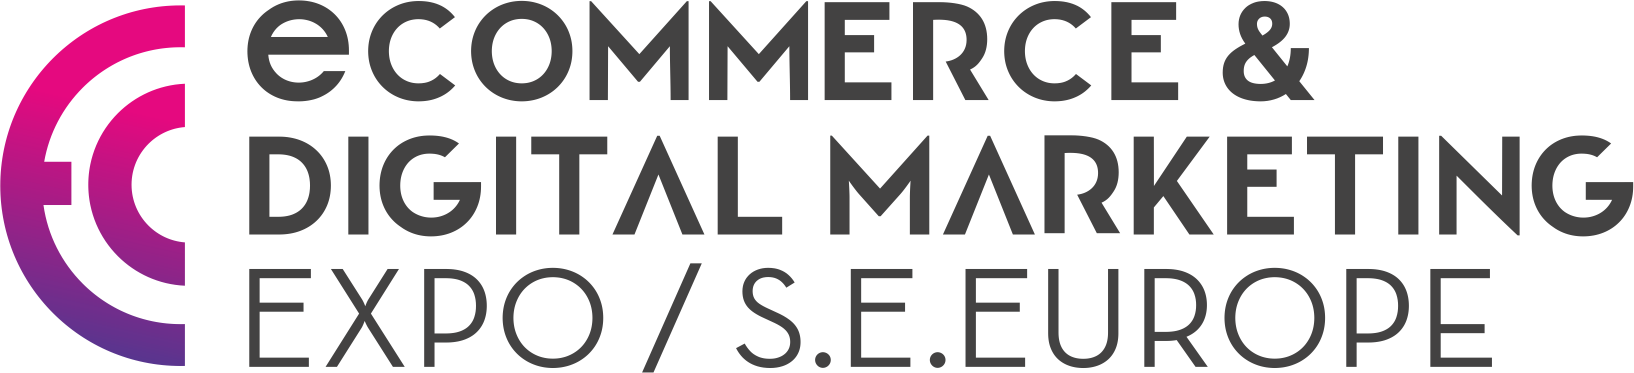 e commerce new logo